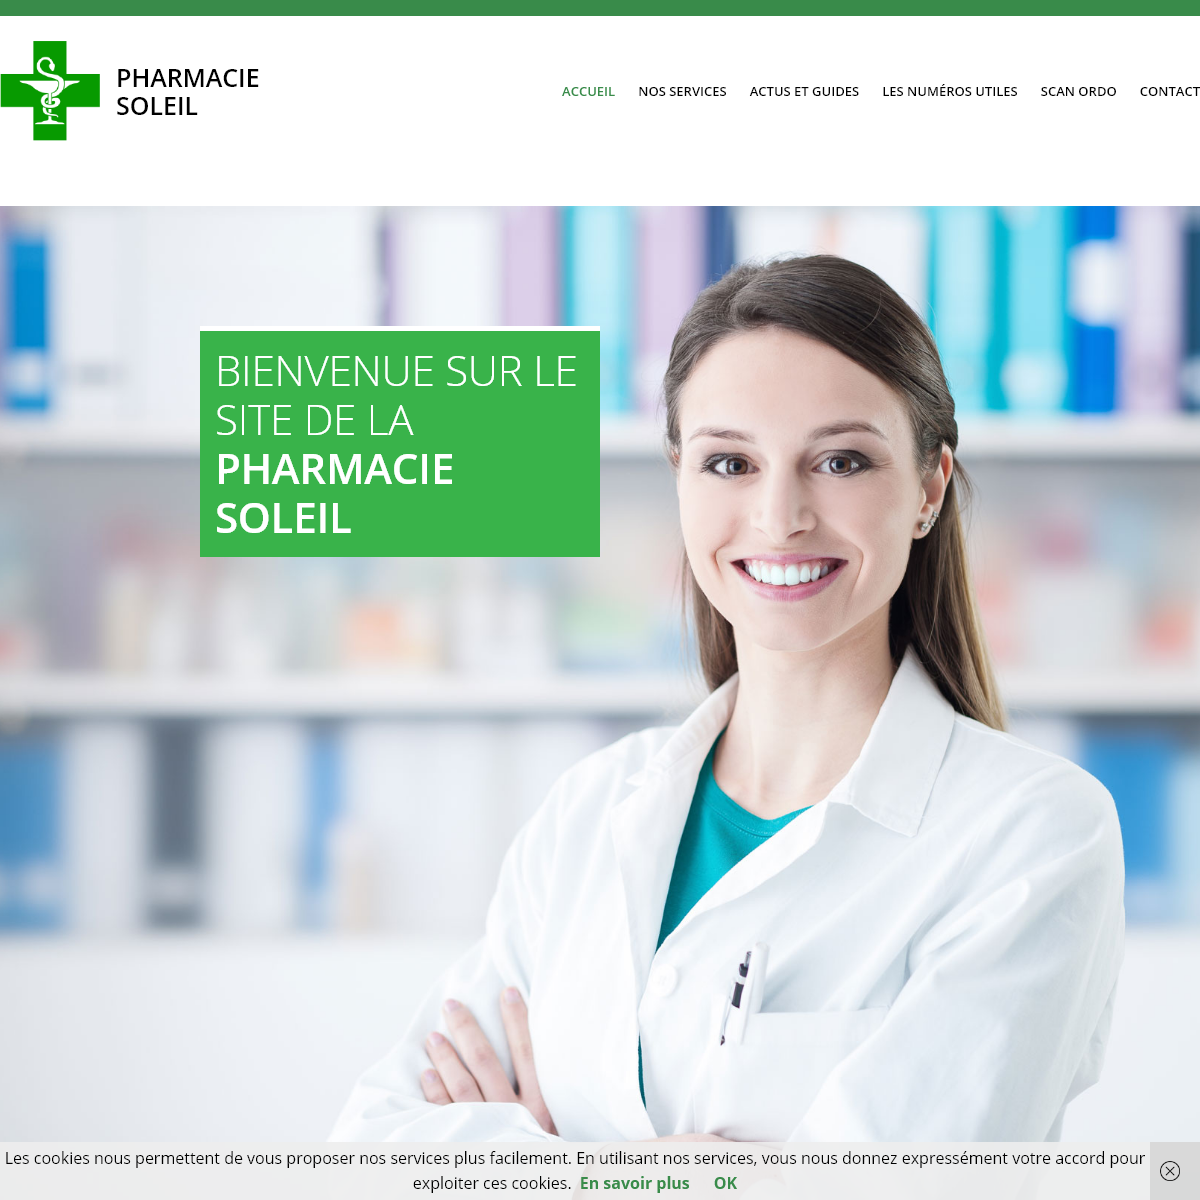 A complete backup of pharmaciesoleil.fr